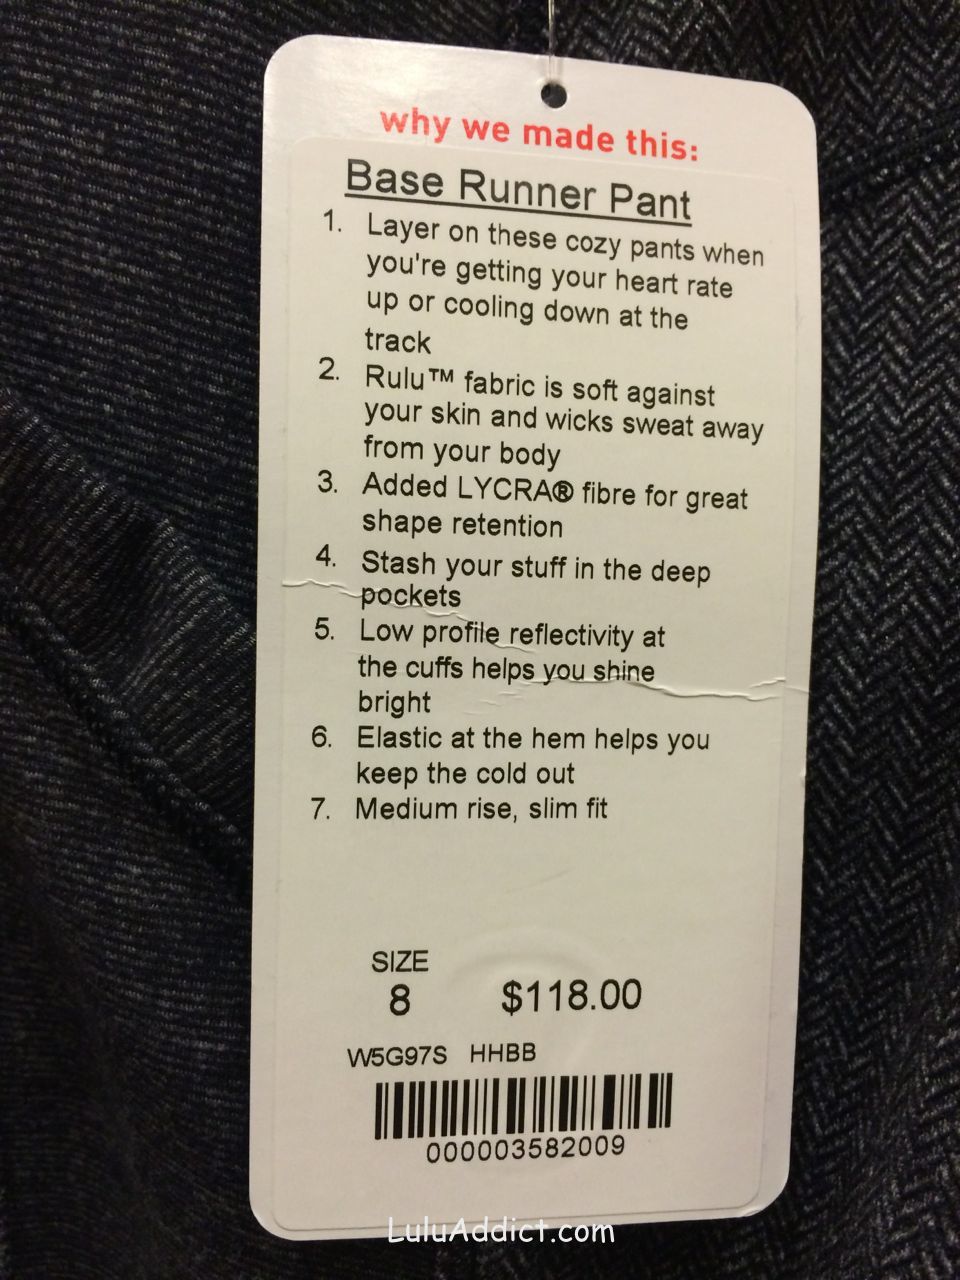 lululemon base runner pant price tag